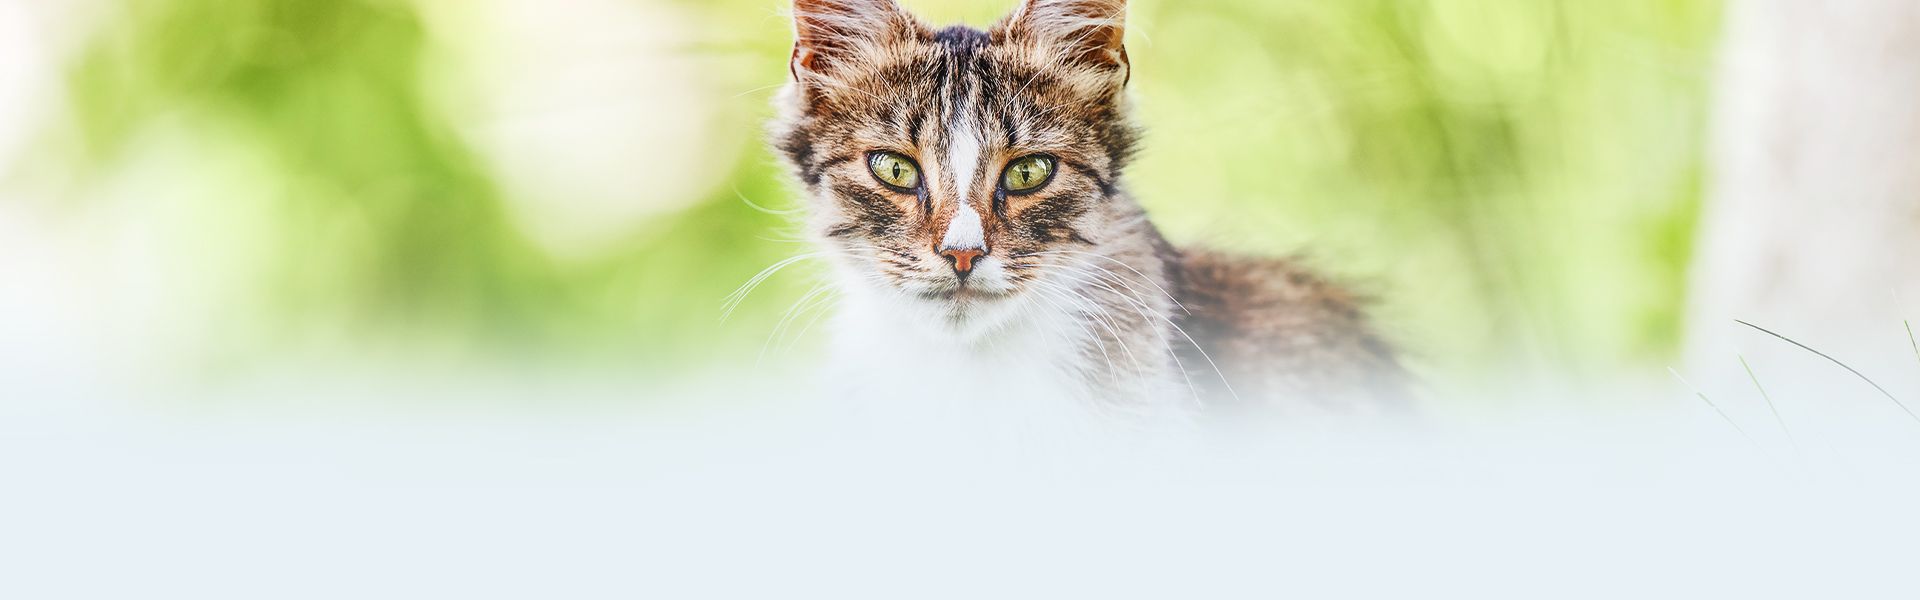 beautiful tabby cat among green grass